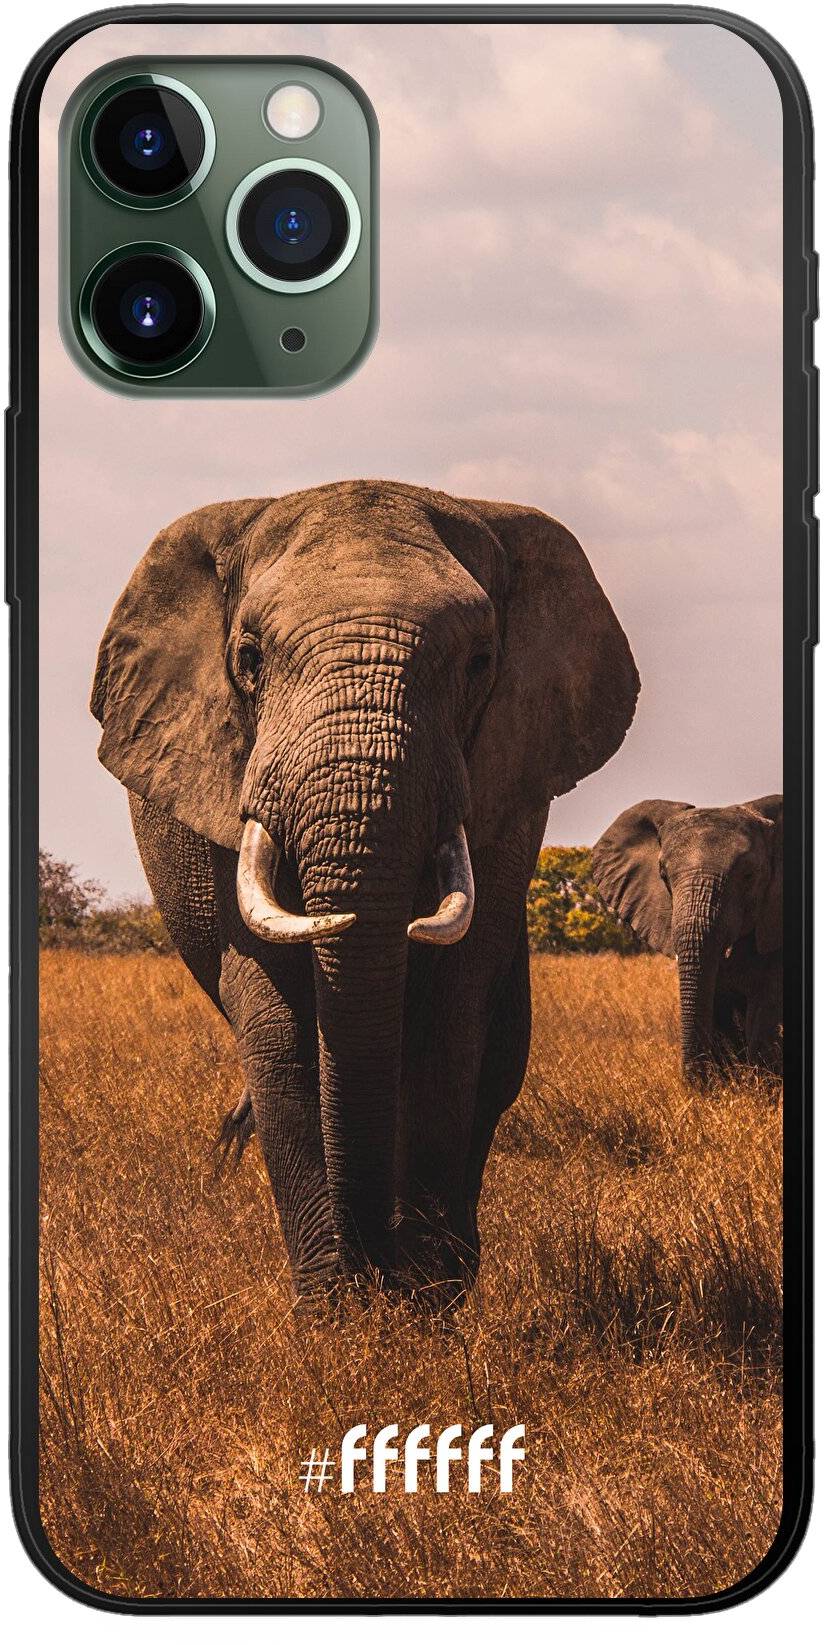 Elephants iPhone 11 Pro